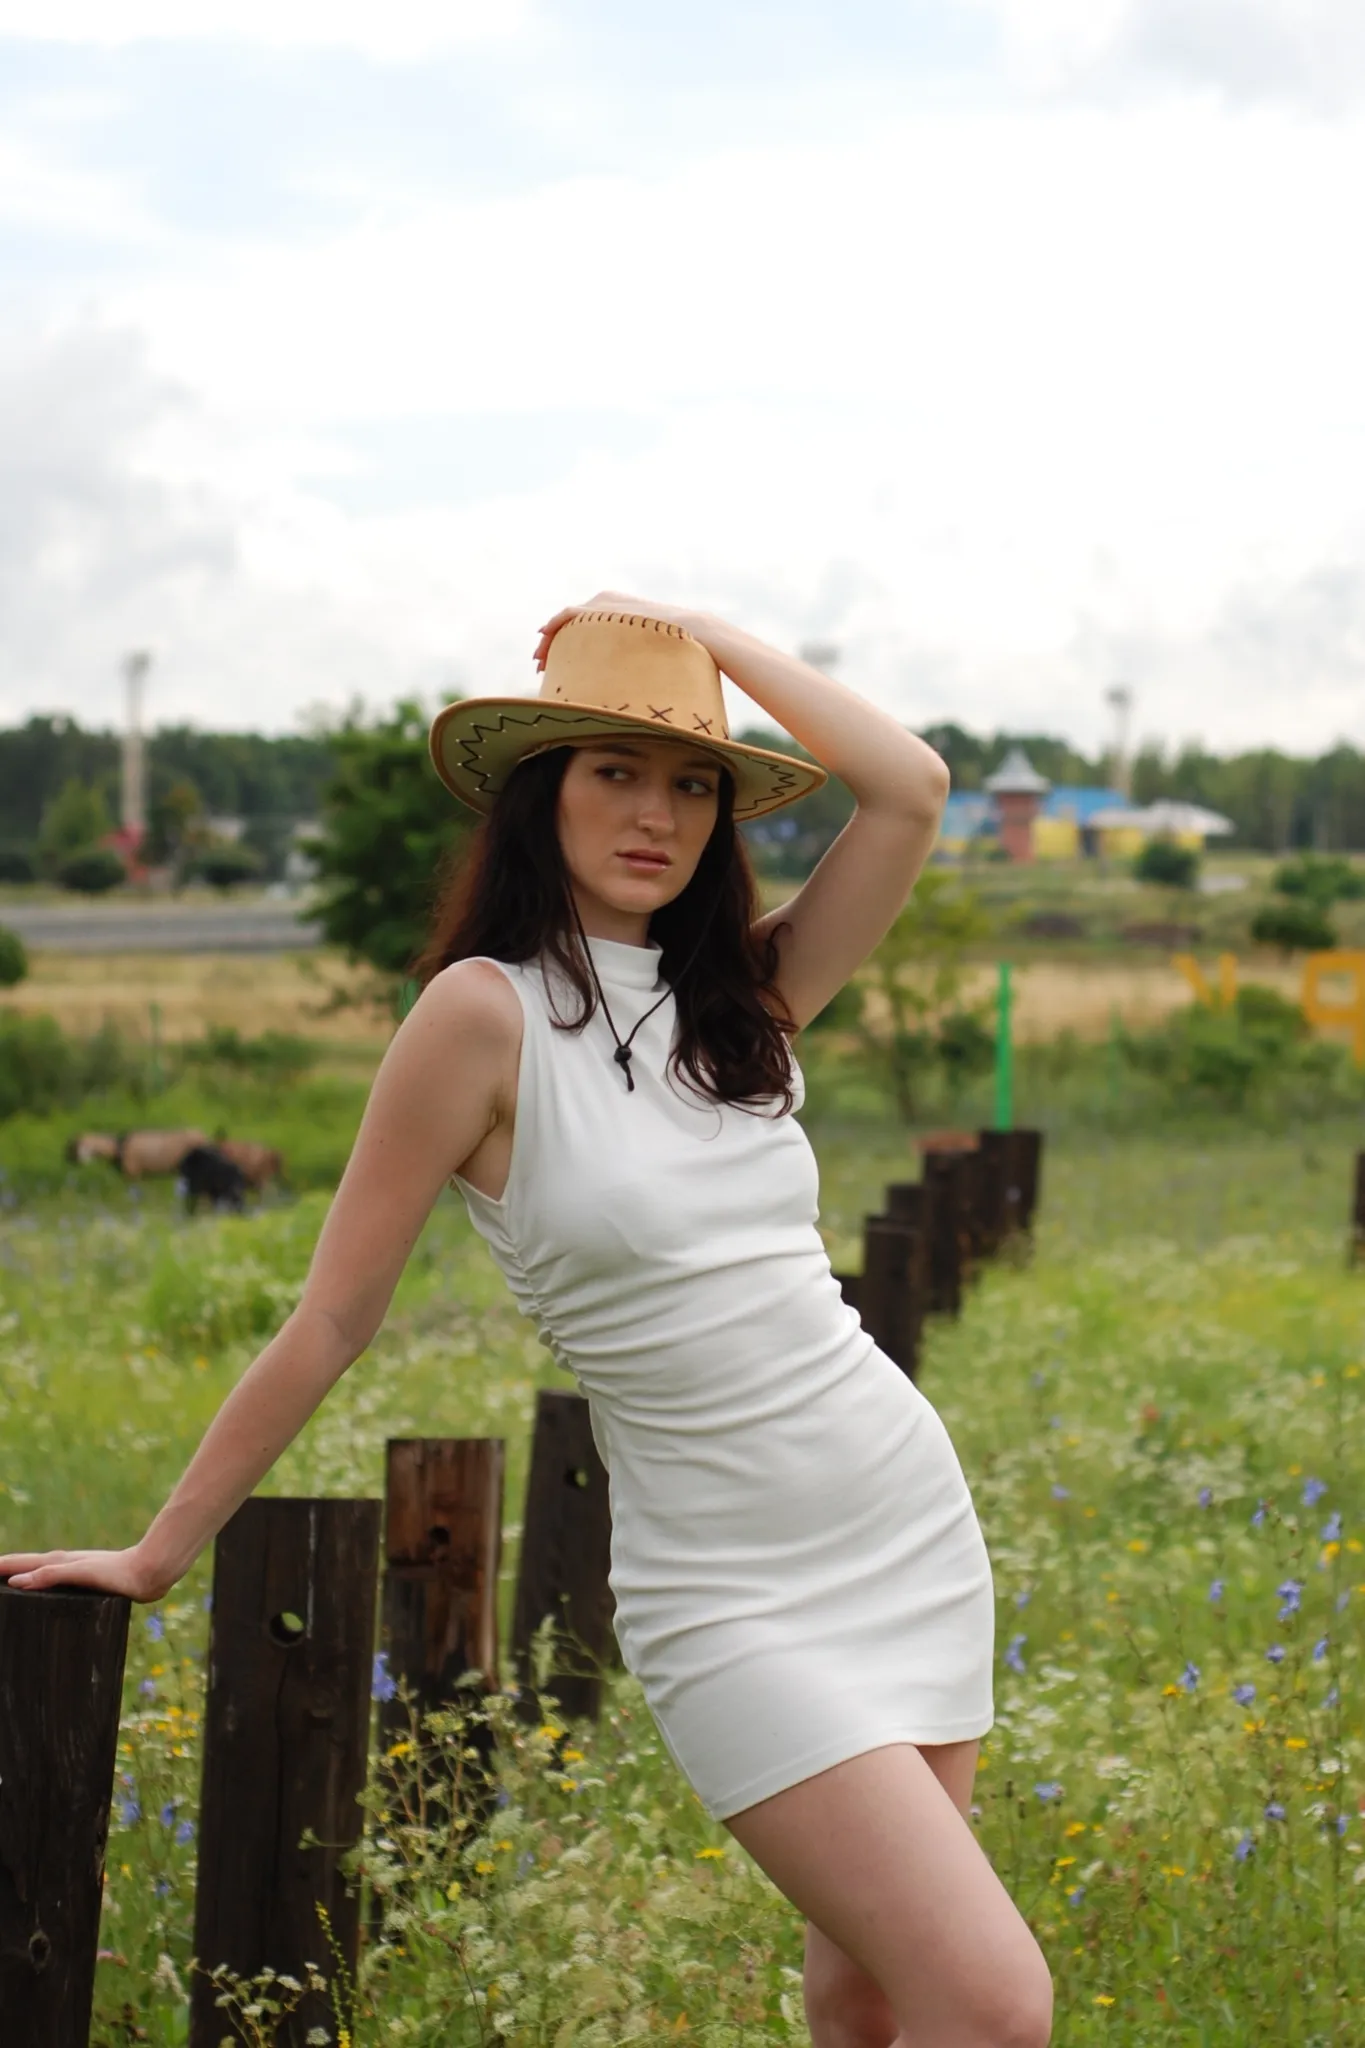 Yulia femme russe foulard